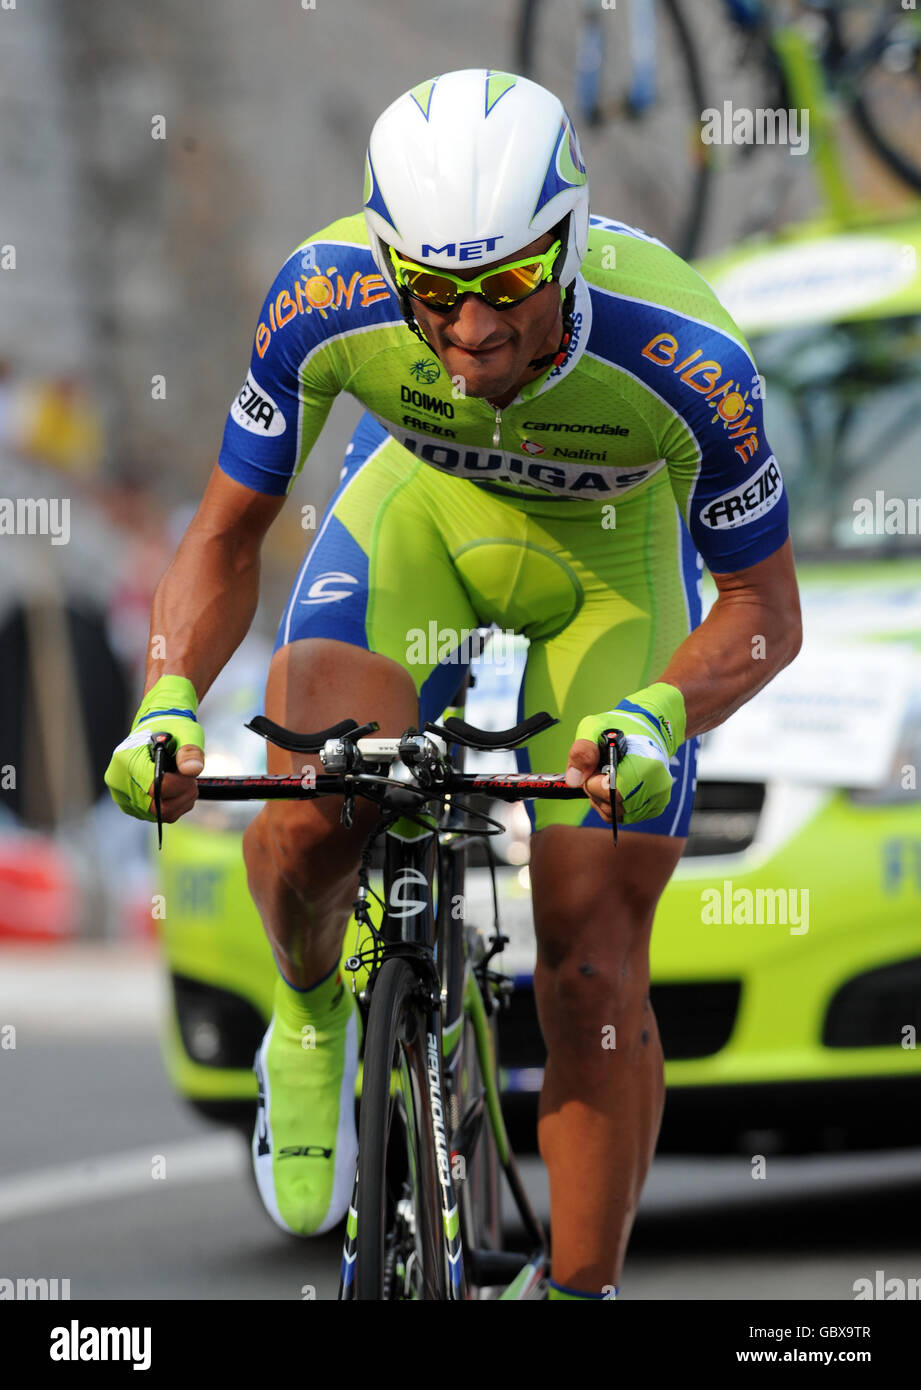 Ciclismo - Tour de France 2009 - prima tappa. Daniele Bennati (Italia), Liquigas Foto Stock